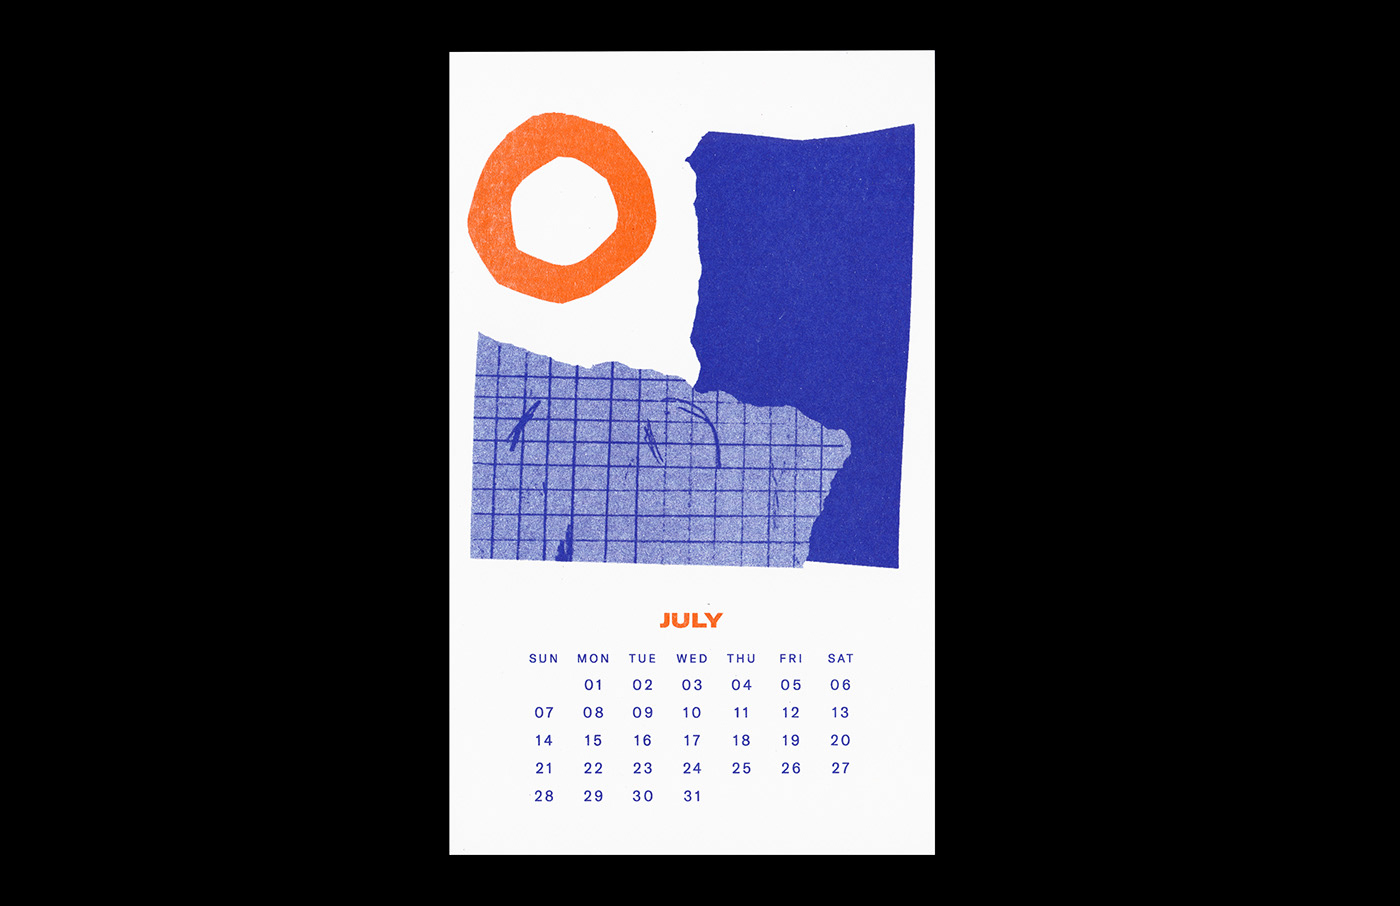 risograph calendar collage 2019 calendar calendrier ILLUSTRATION  abstract Riso cutout shape